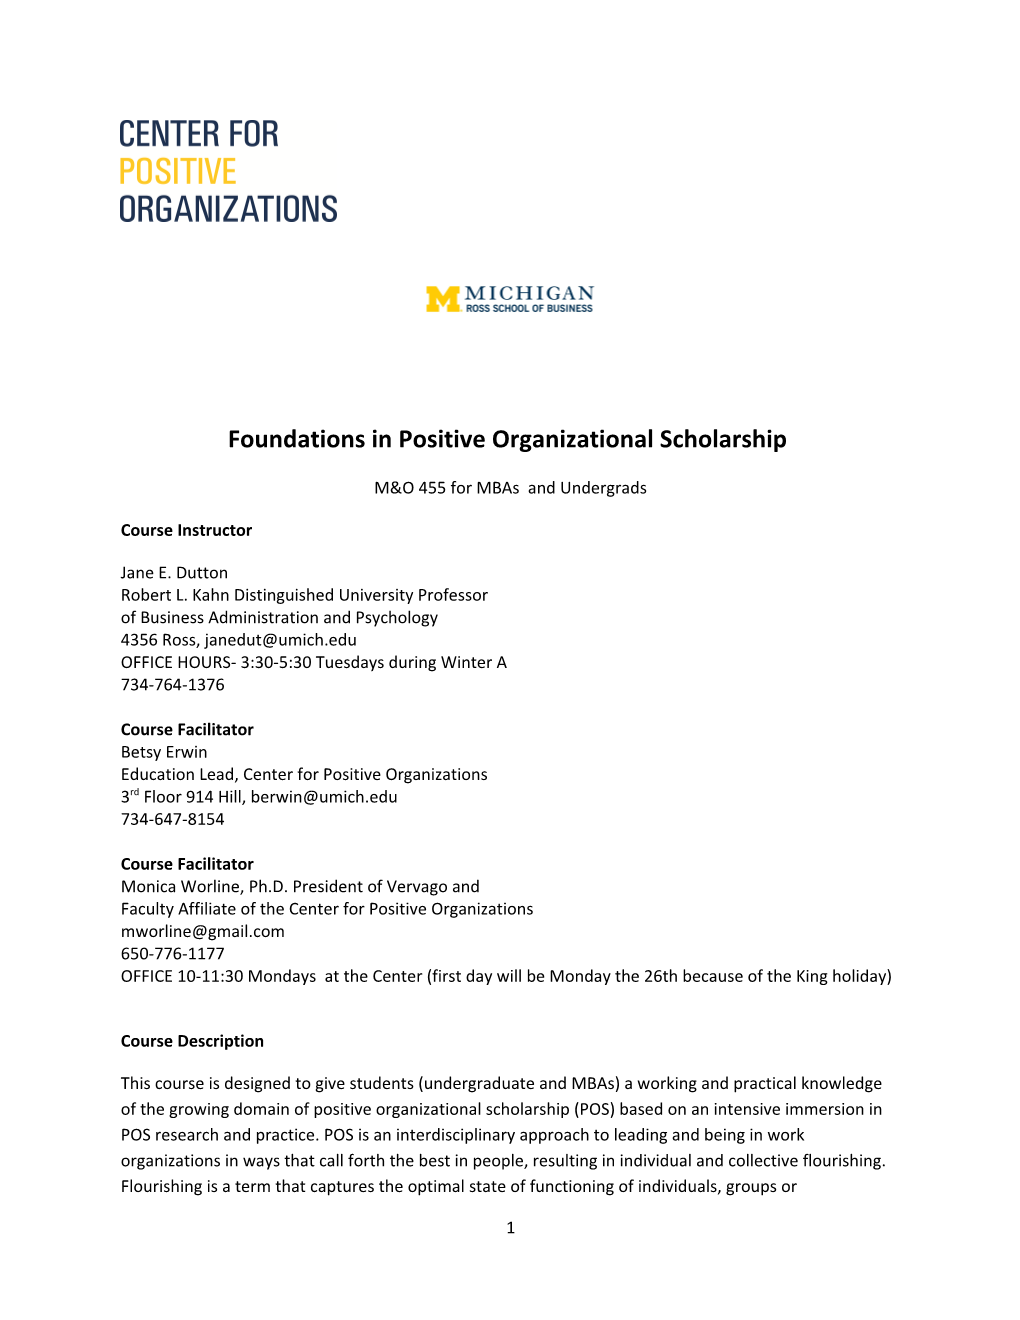 Foundations in Positive Organizational Scholarship